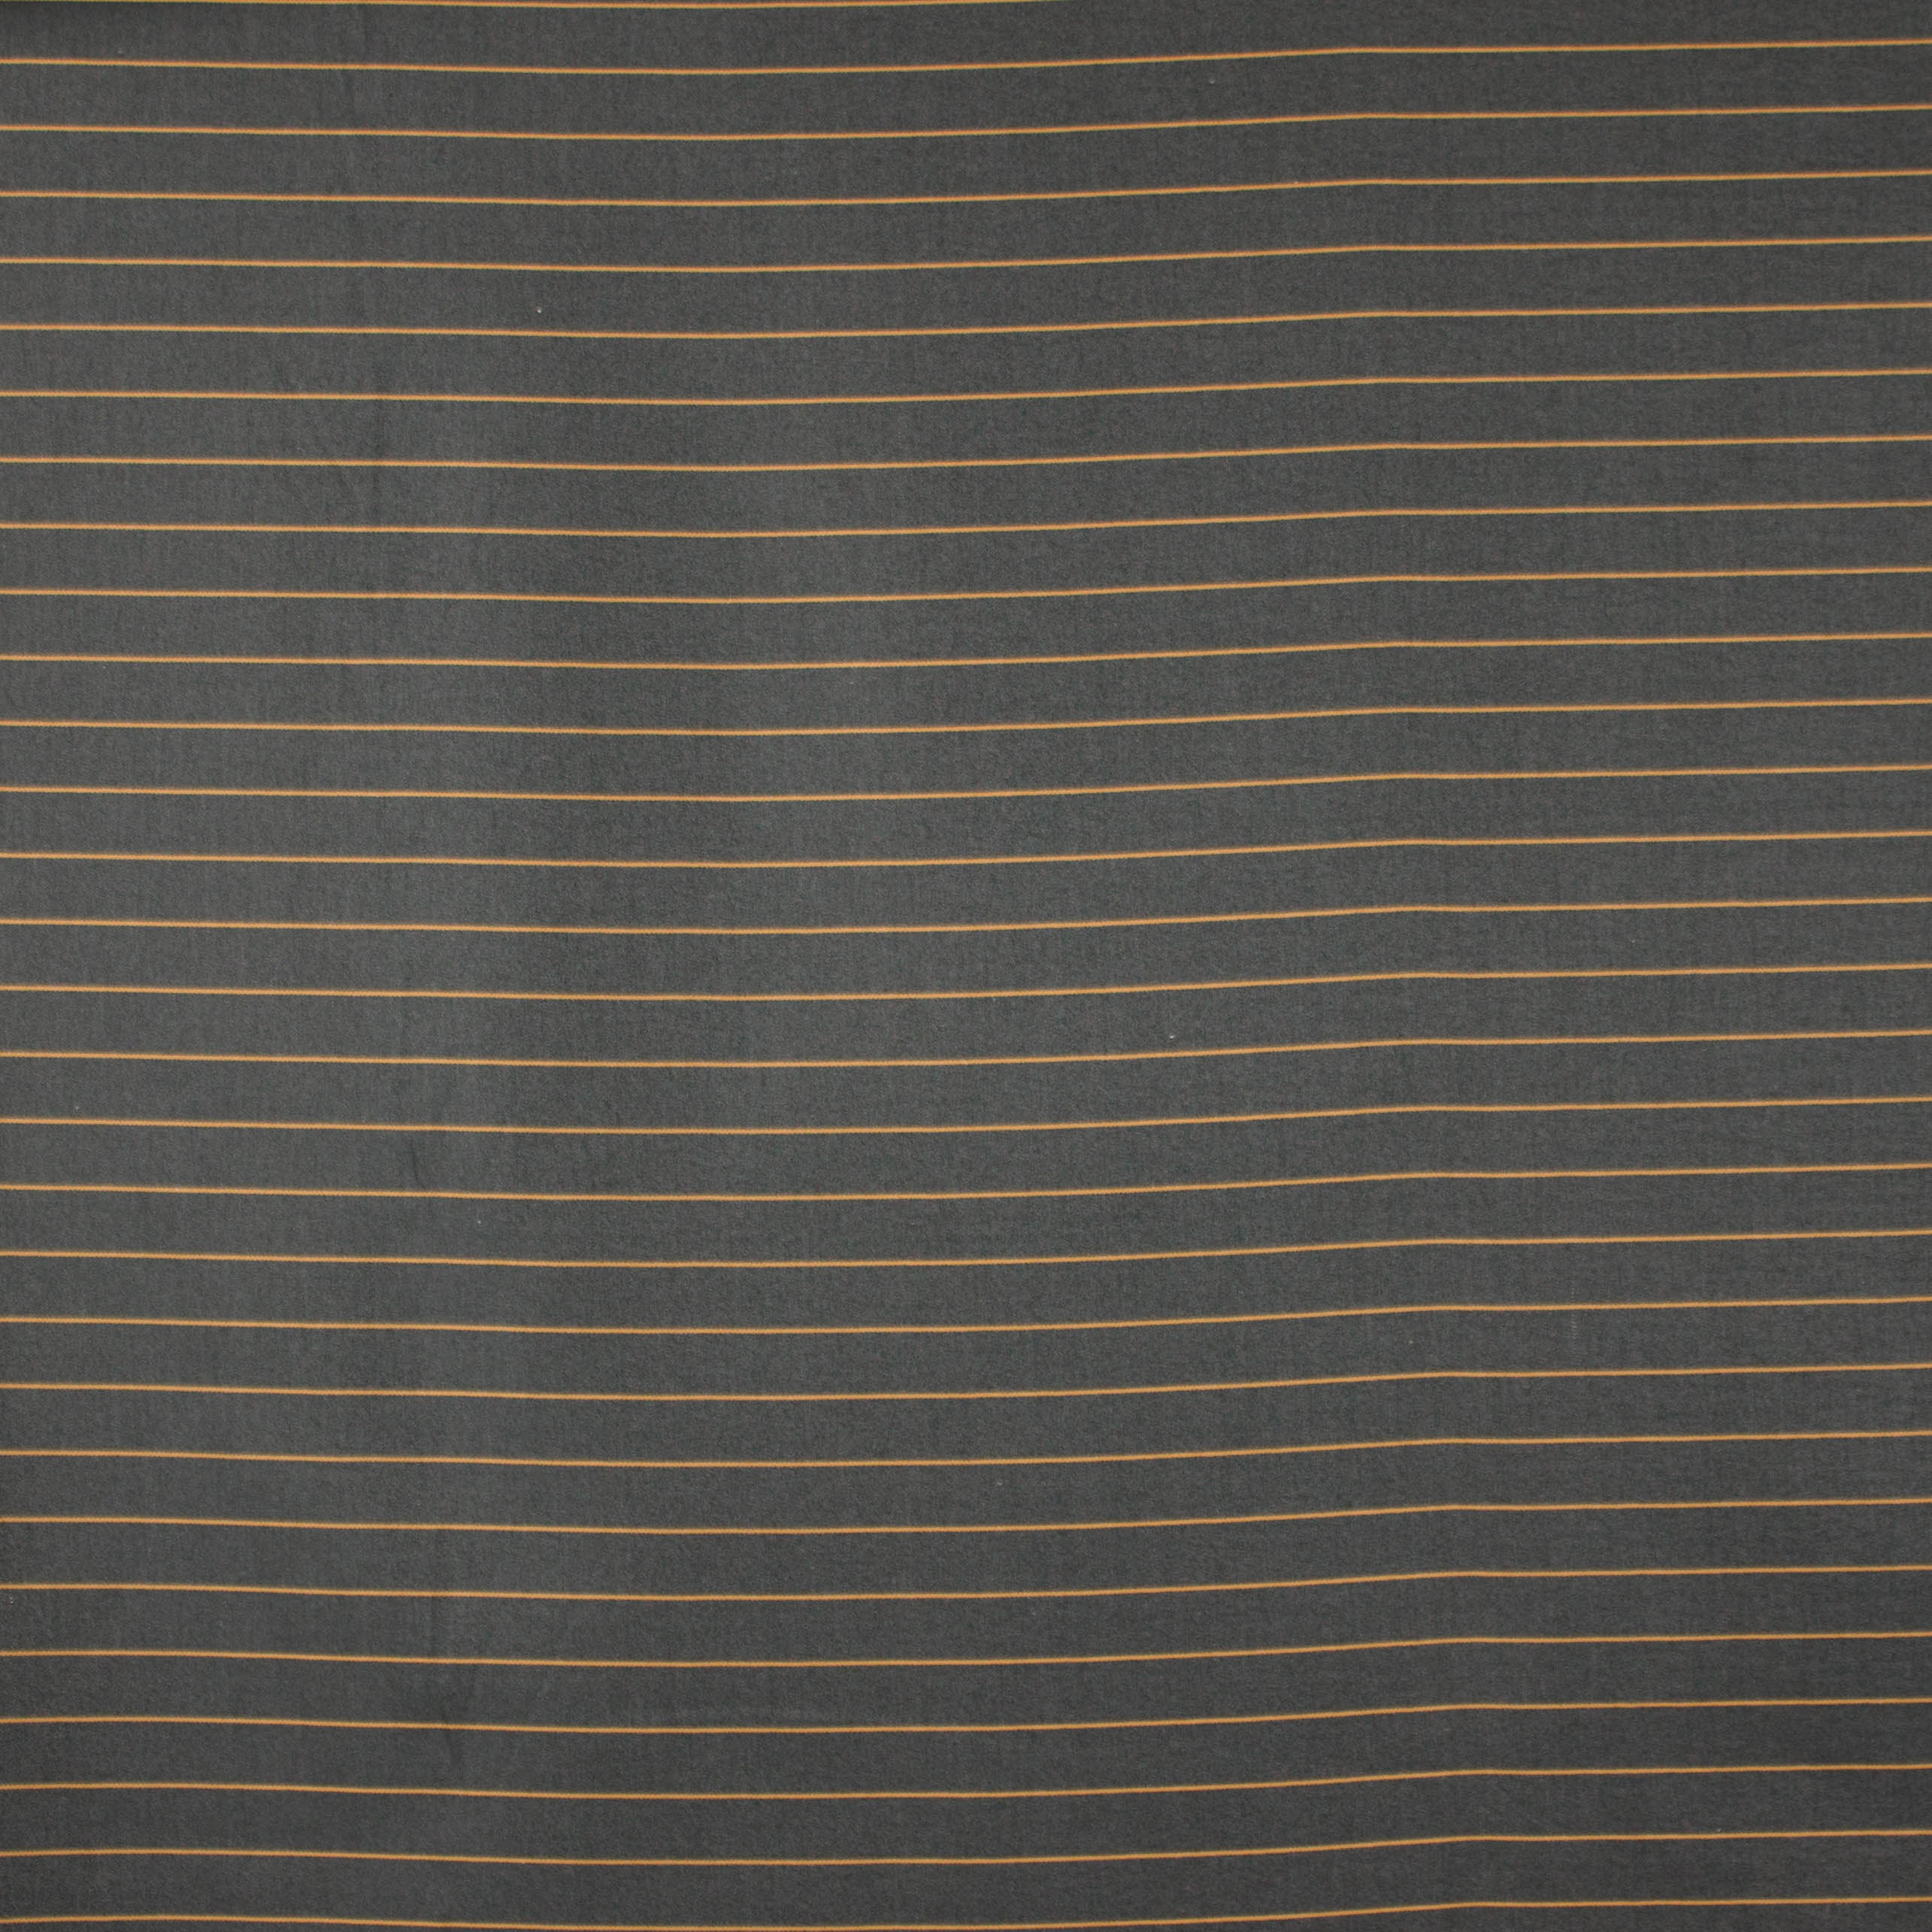 Donkerblauwe polyester / viscose / polyamide mengeling met oranje streepjes